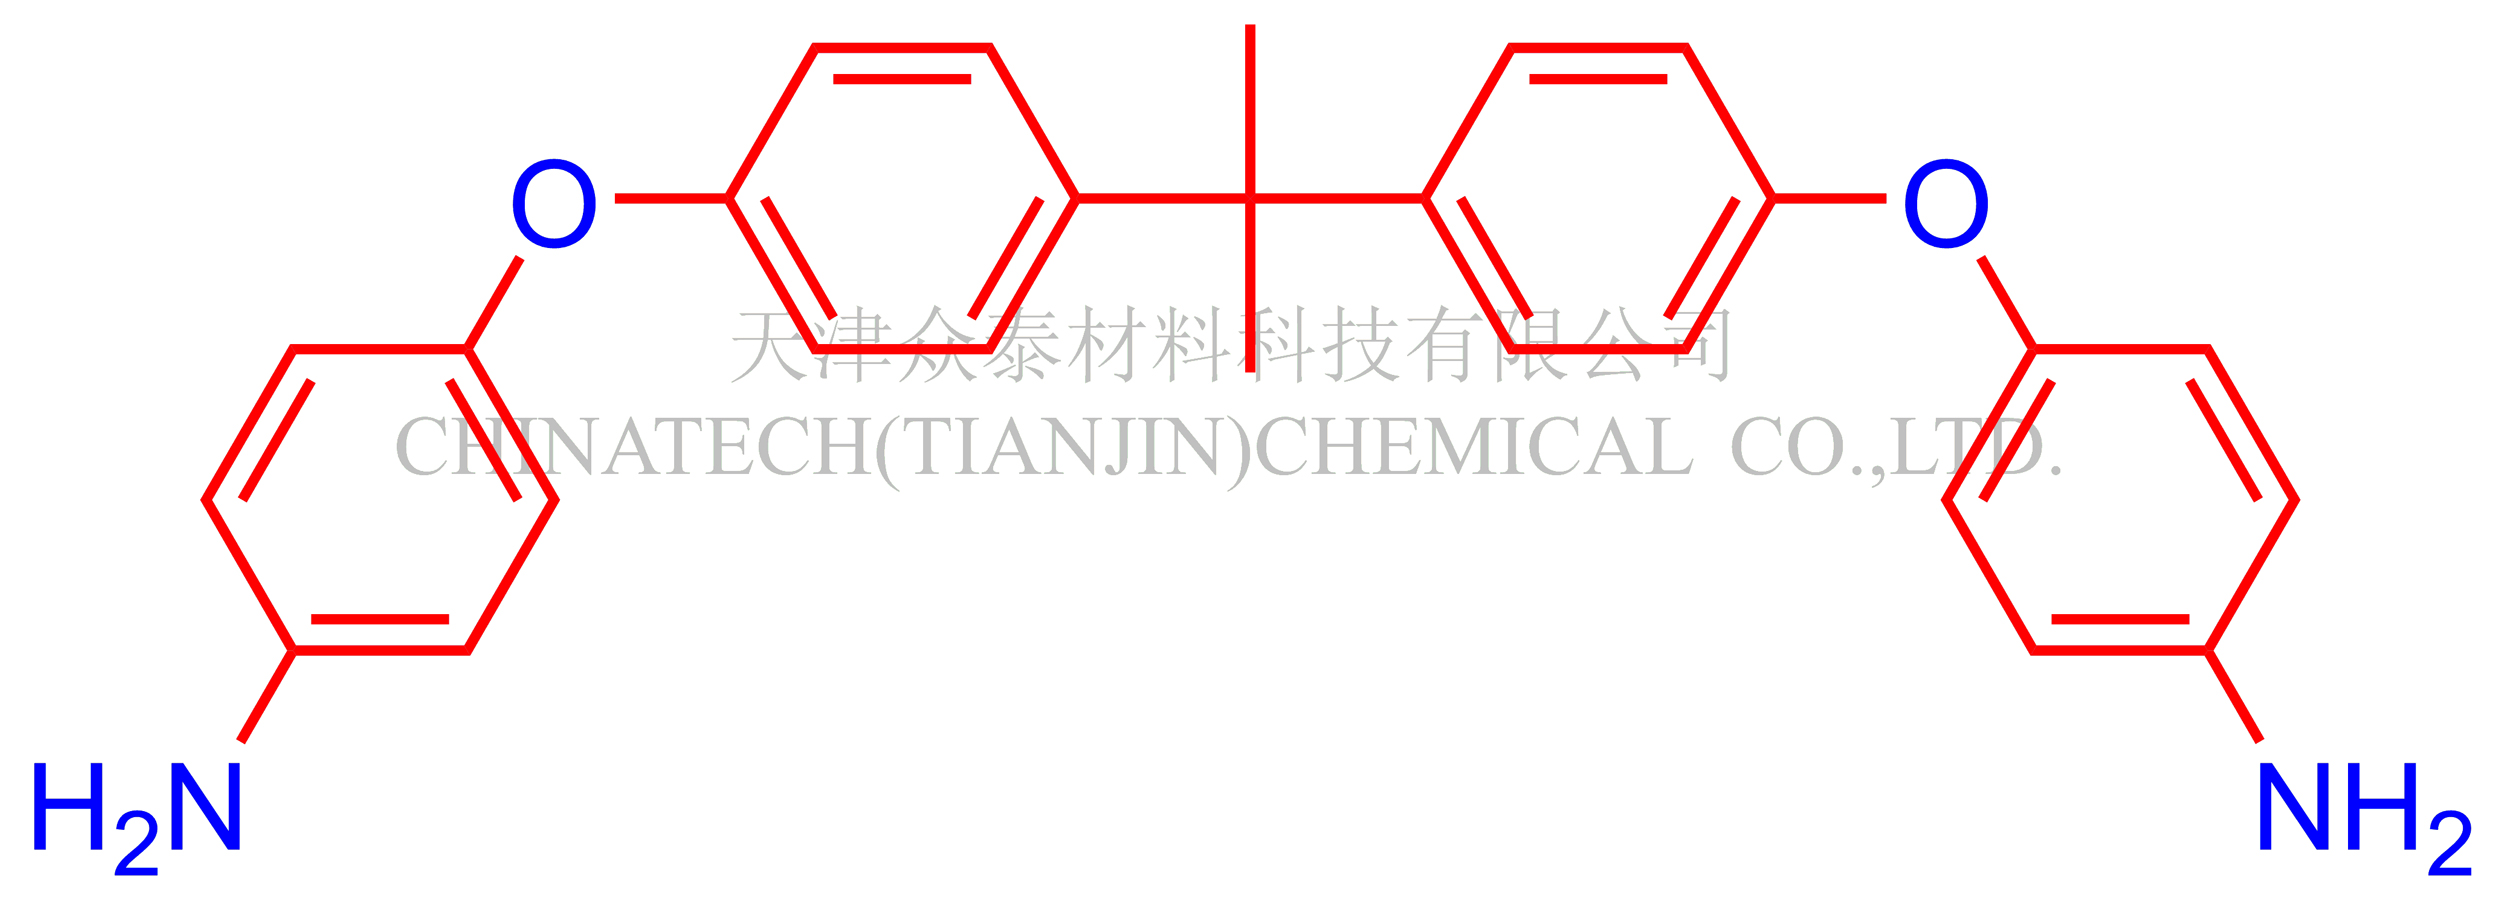 2,2'-Bis(4-aminophenoxyphenyl) propane (BAPP)